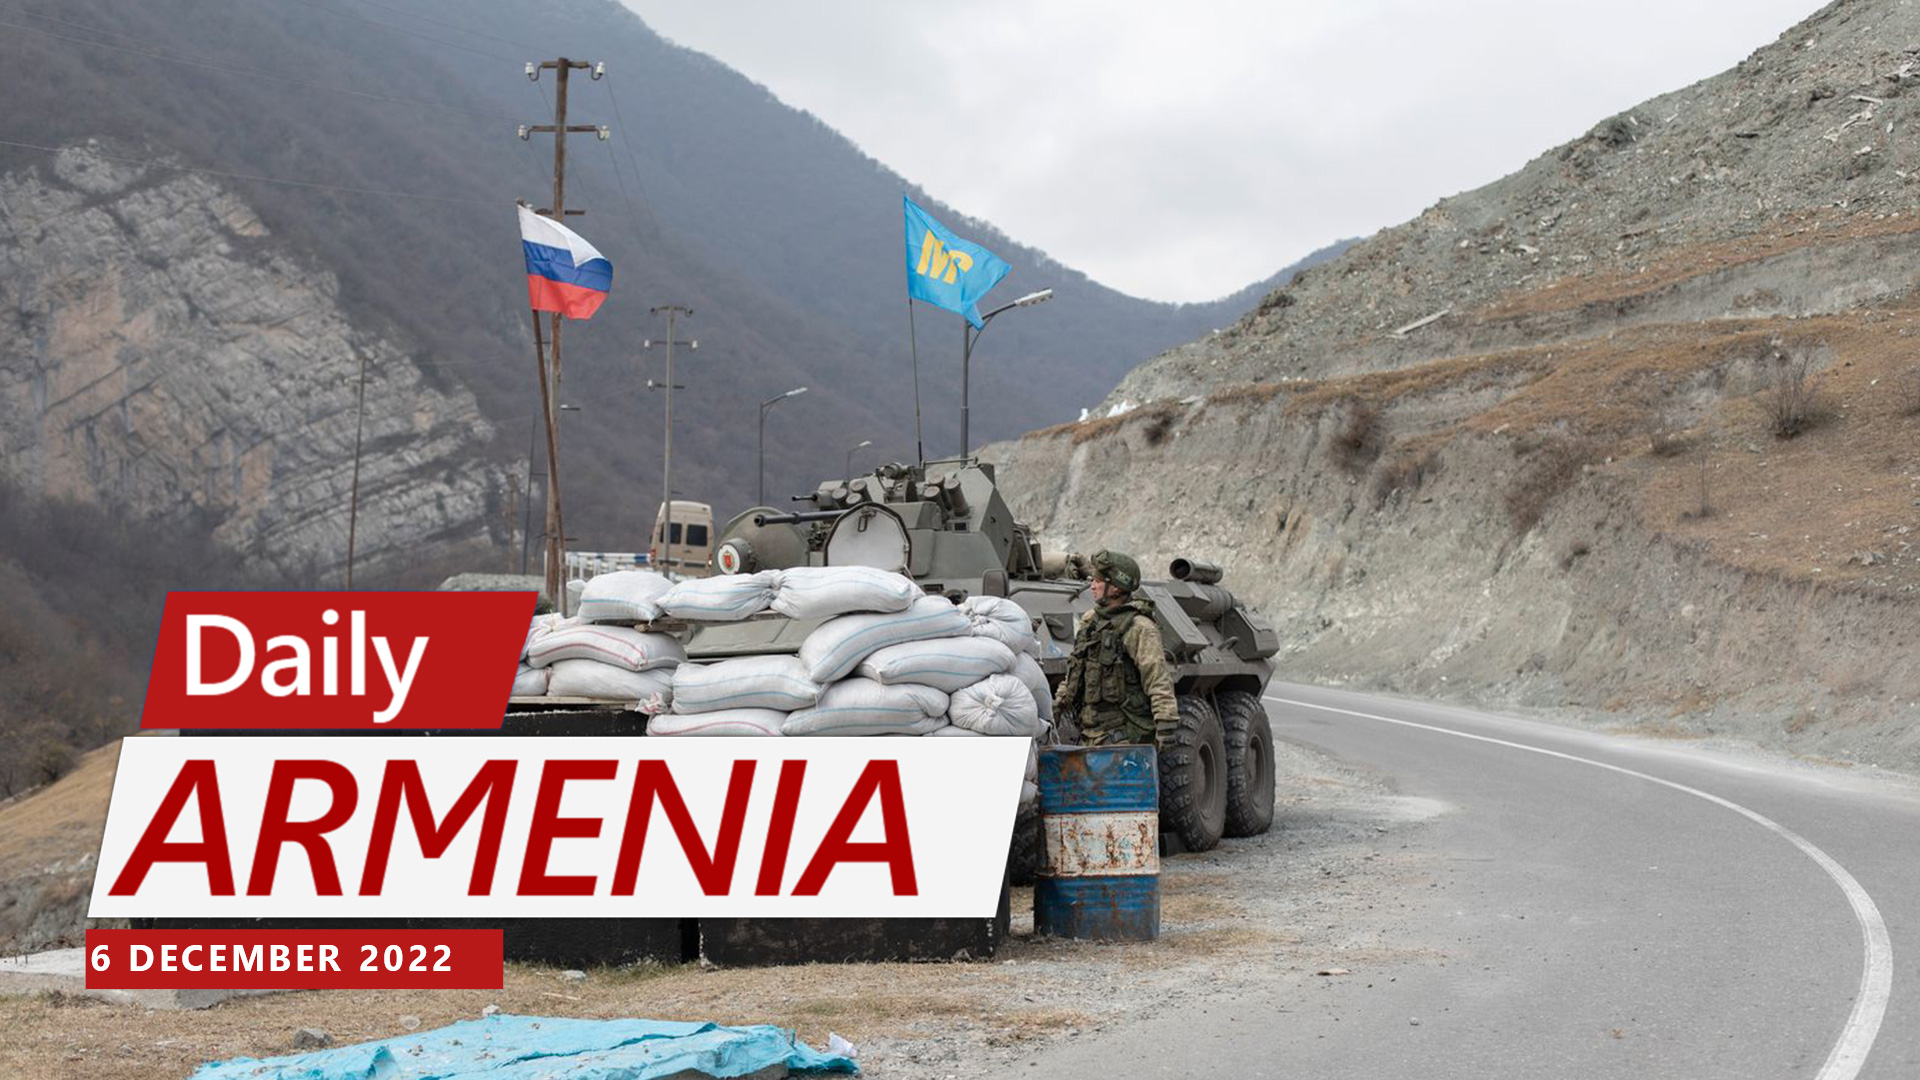 No Azerbaijani checkpoint to be set up on Armenia-Karabakh route, says Stepanakert